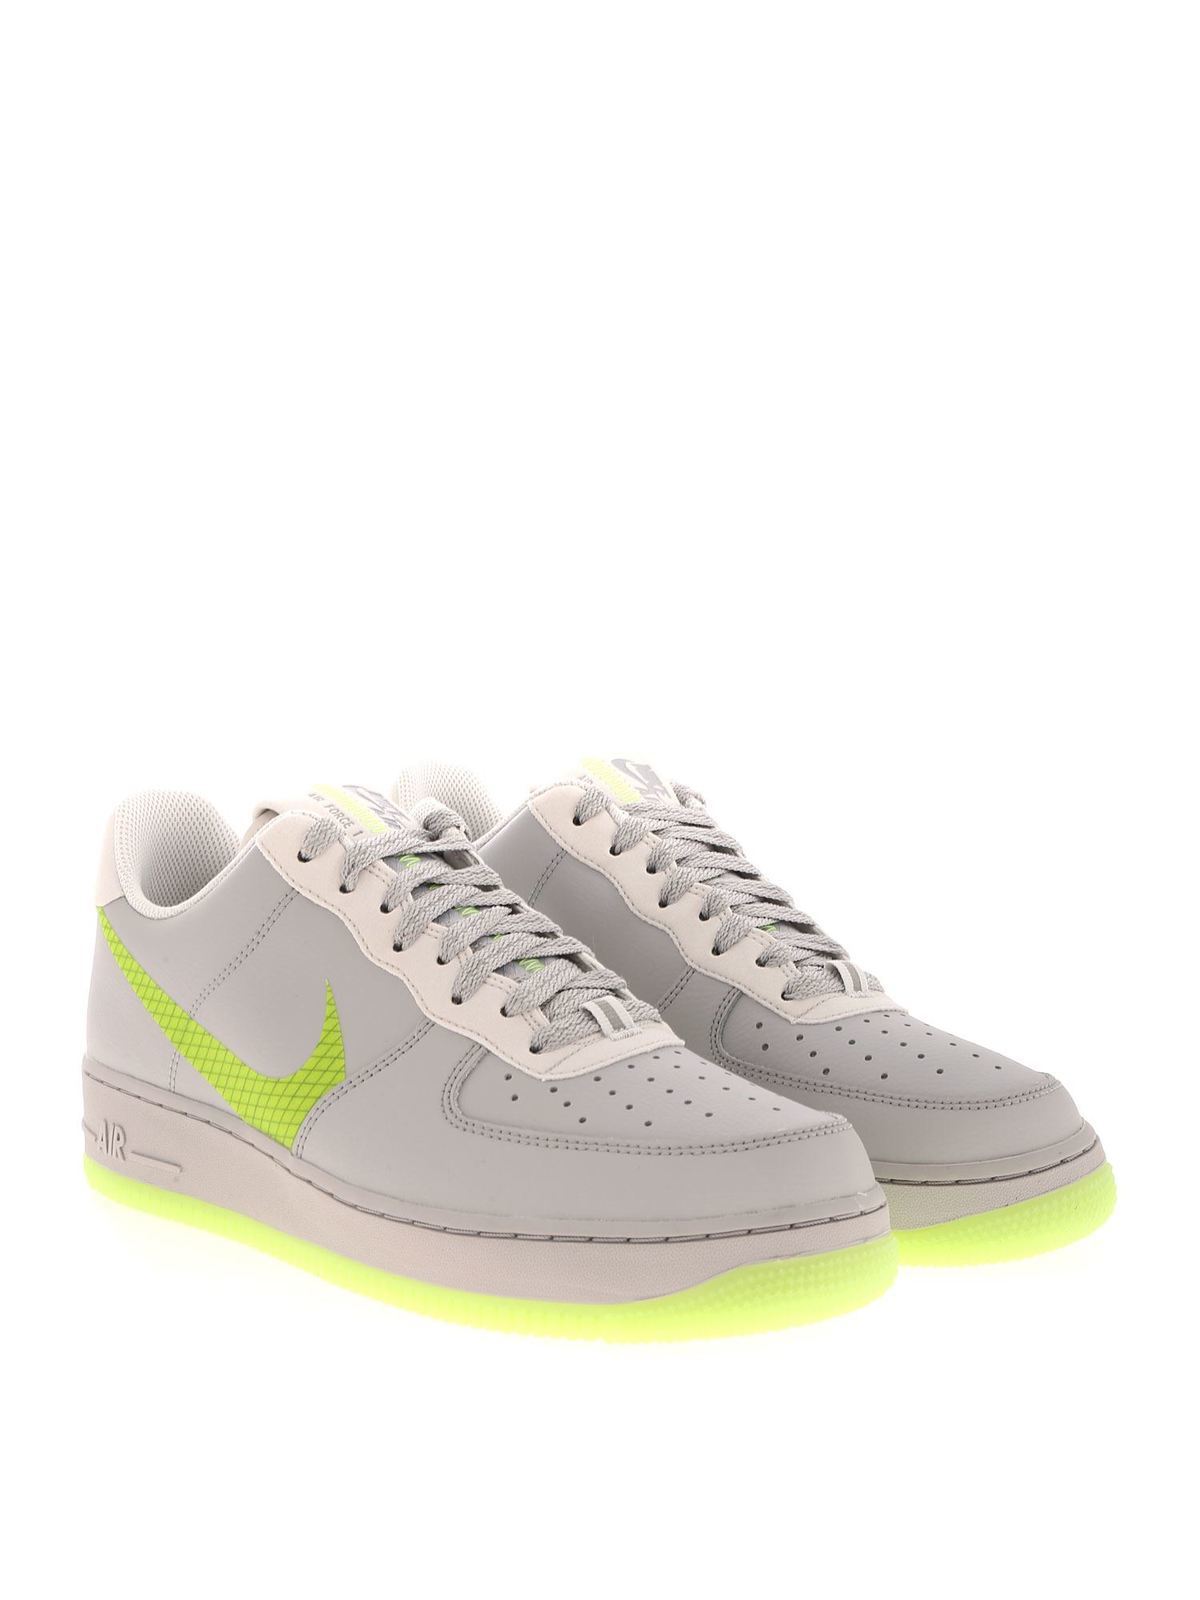 Trainers Nike - Air Force 1 '07 LV8 3 sneakers grey and neon ... تجربتي مع كريم بيزلين للمنطقه الحساسة